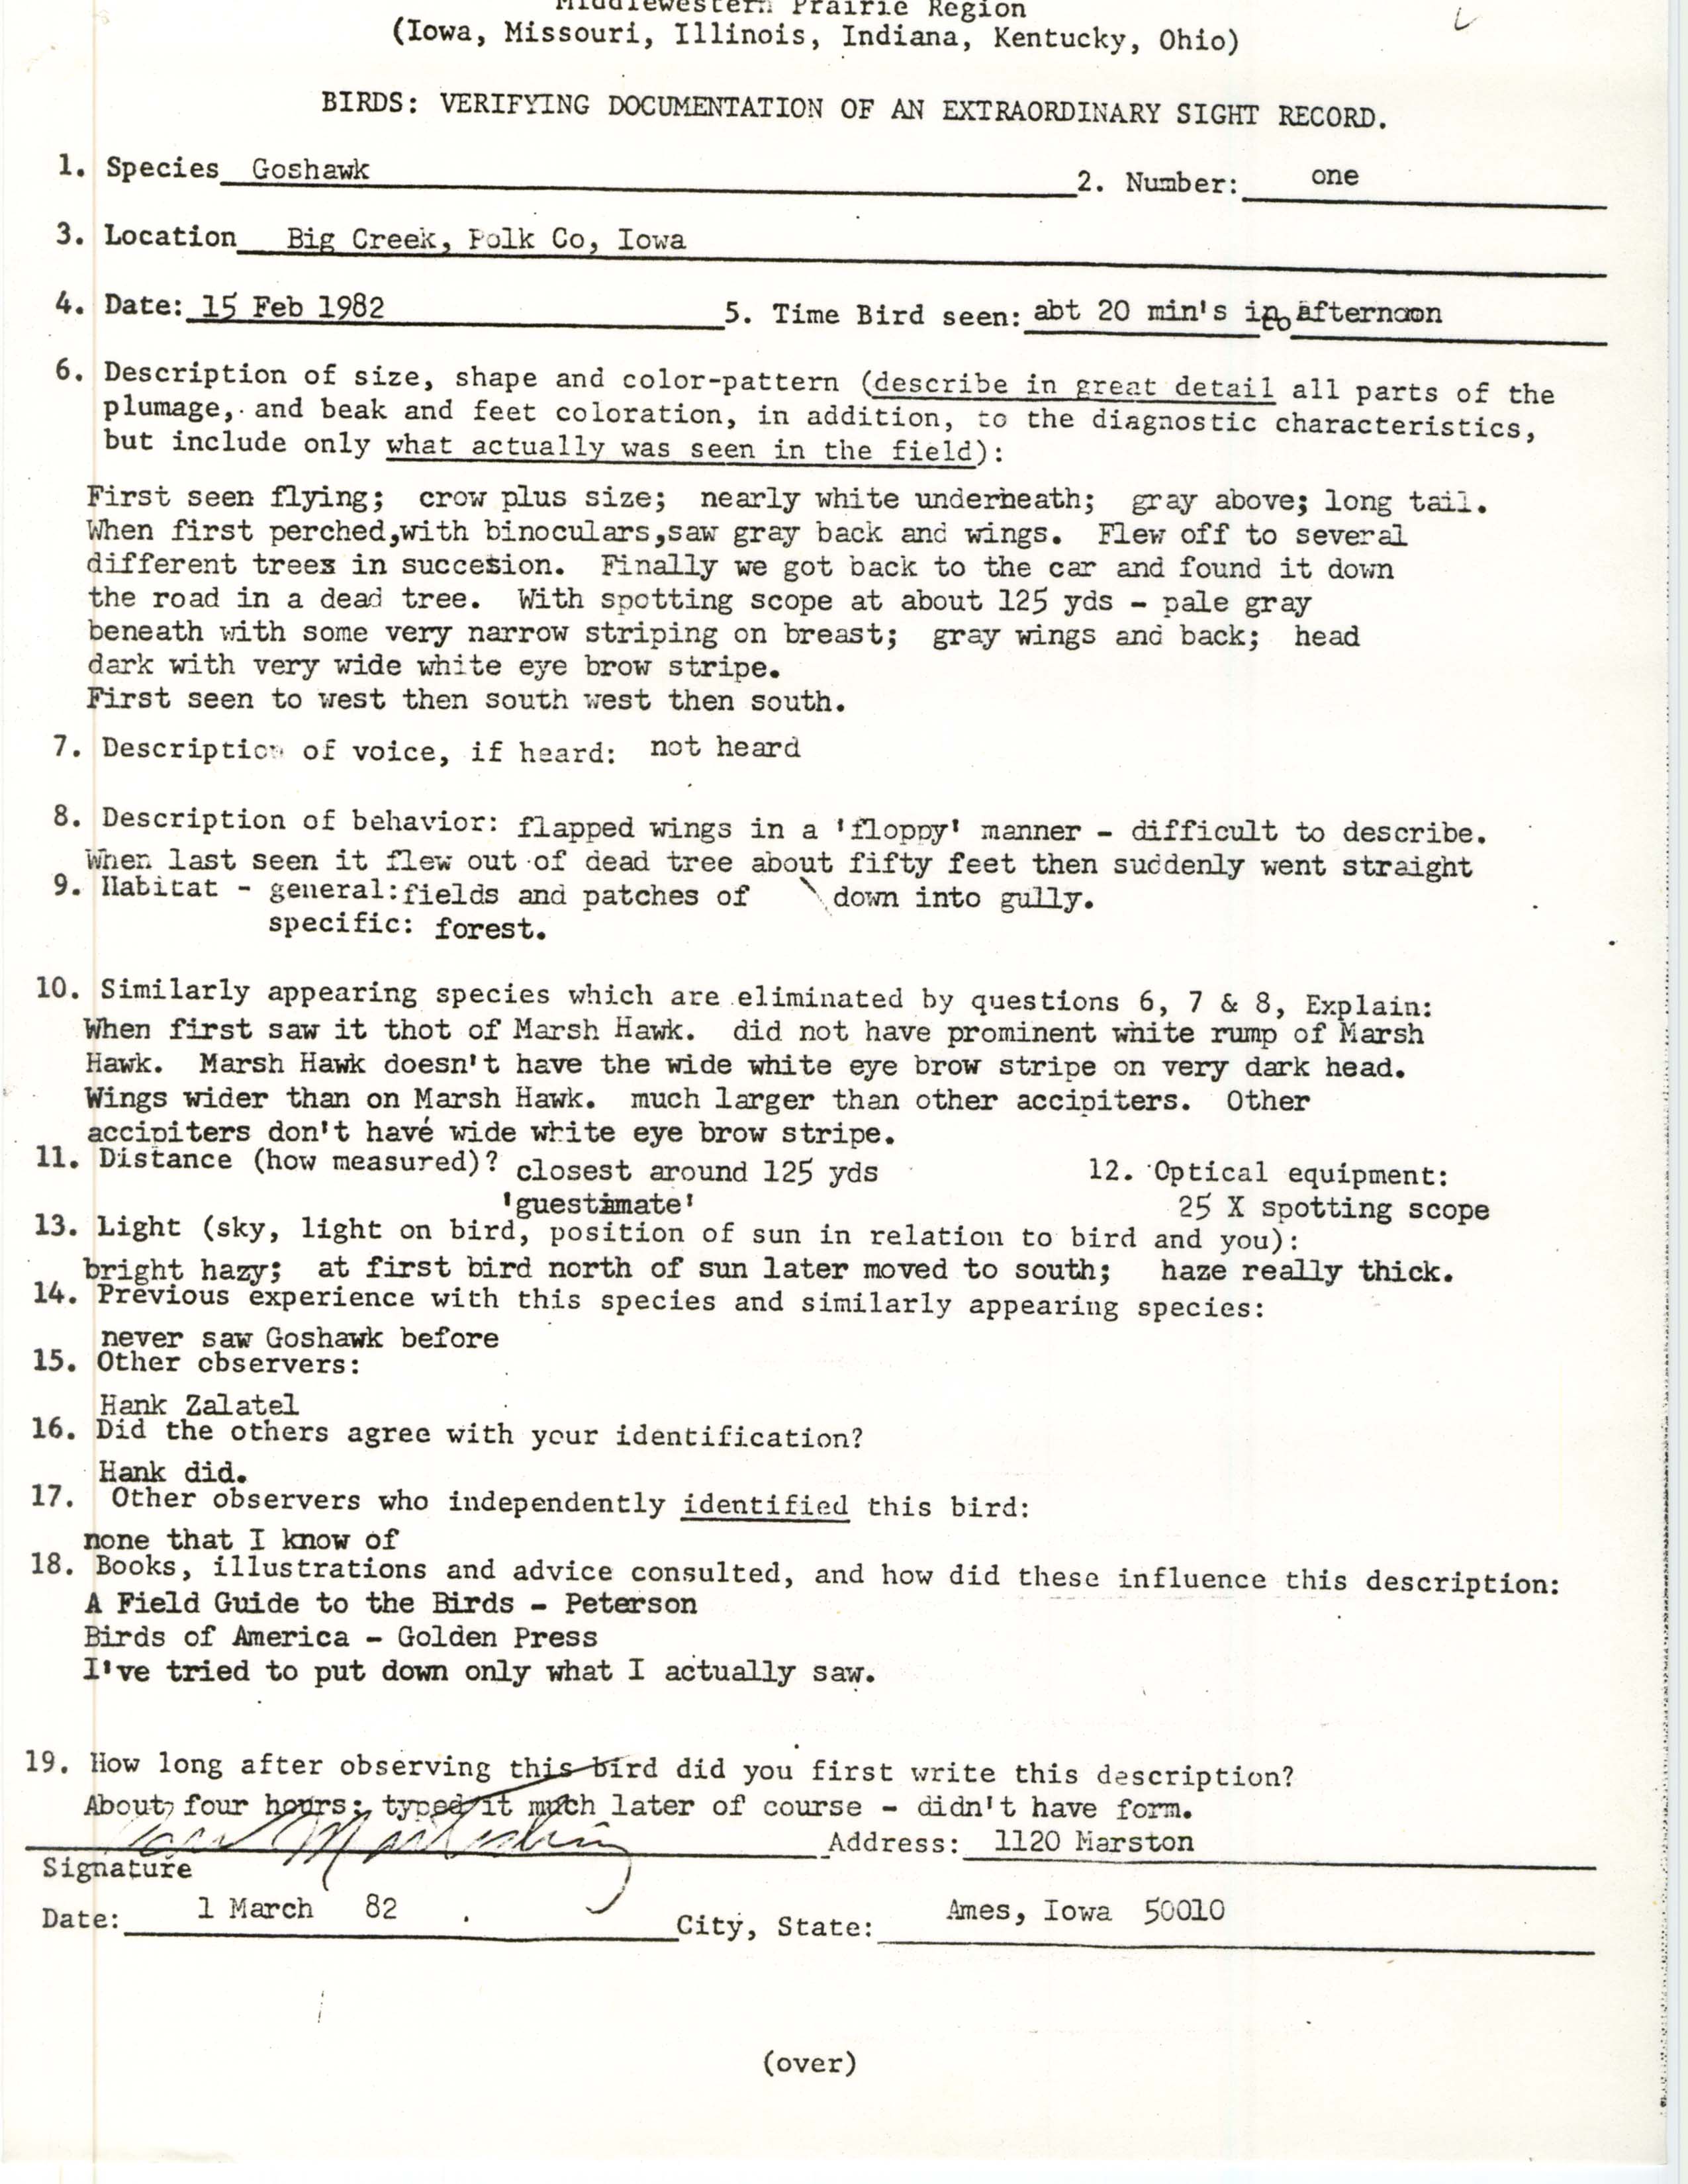 Rare bird documentation form for Northern Goshawk at Big Creek, 1982